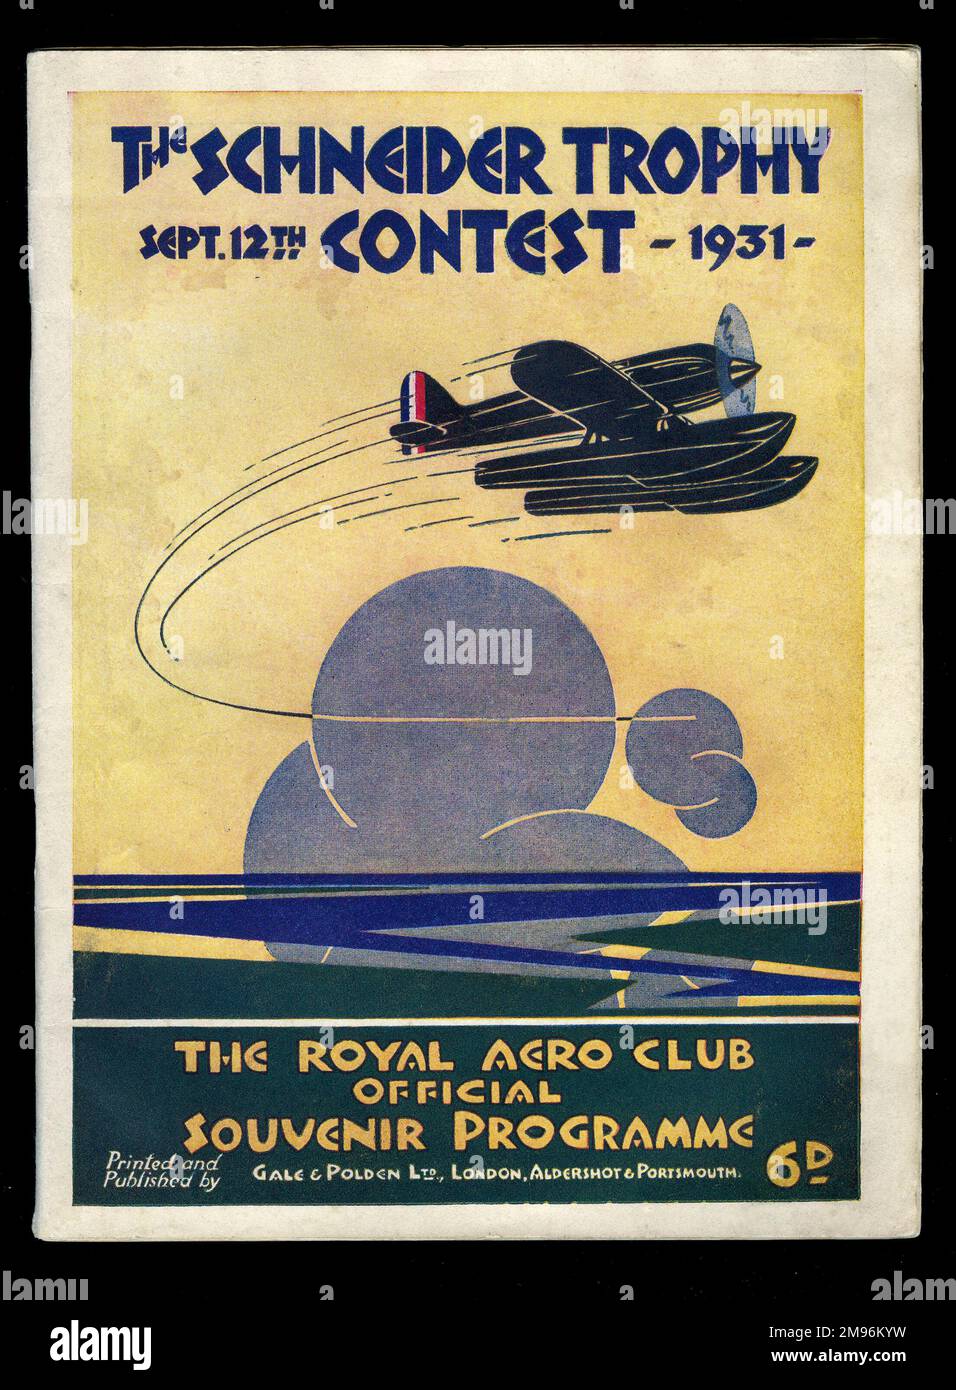 Souvenir programme cover design, Schneider Trophy Contest. Stock Photo